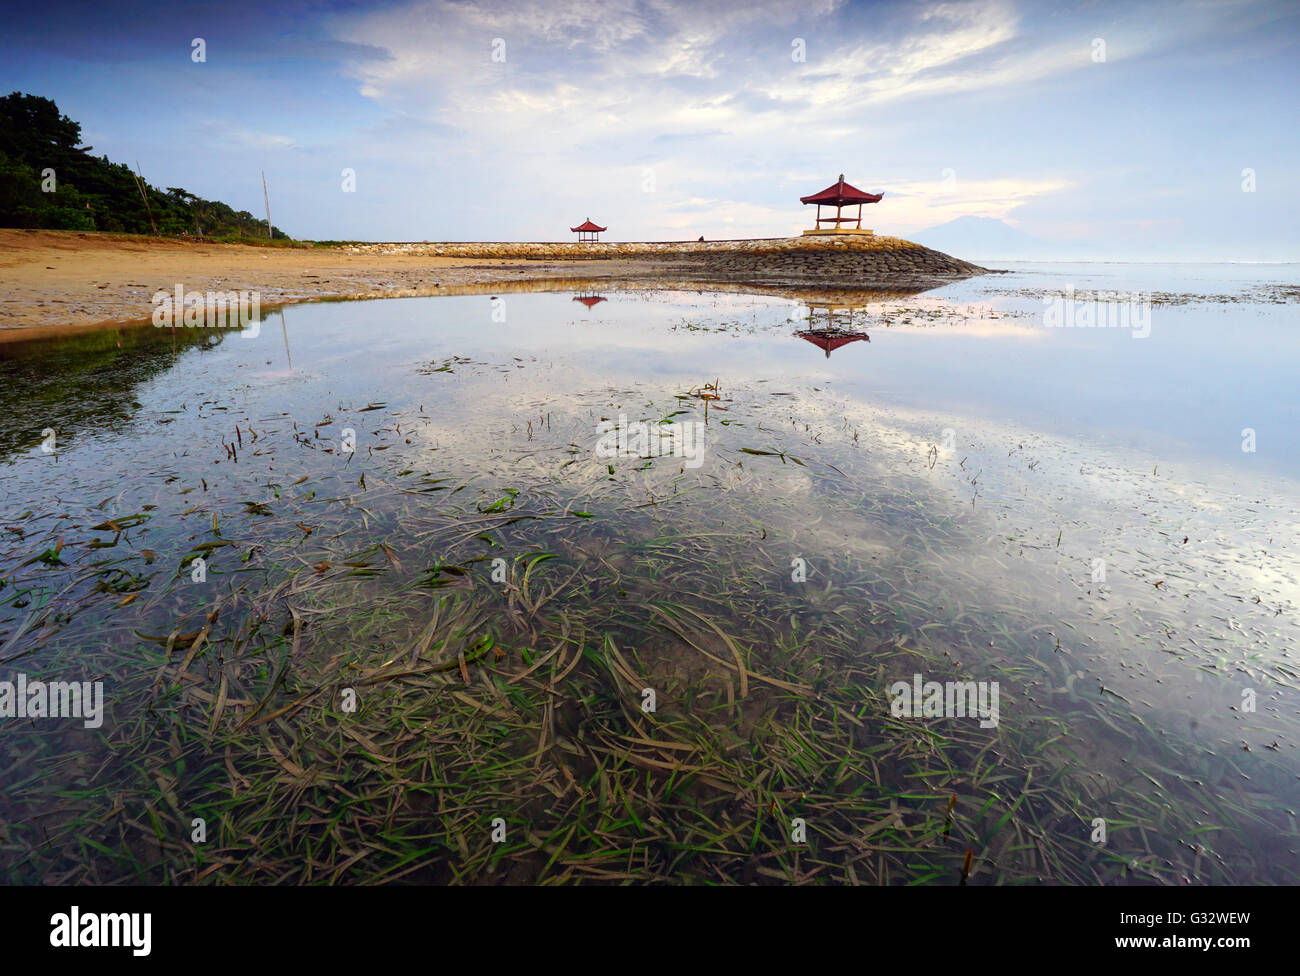 Pavilion on Karang beach, Sanur, Bali, Indonesia Stock Photo